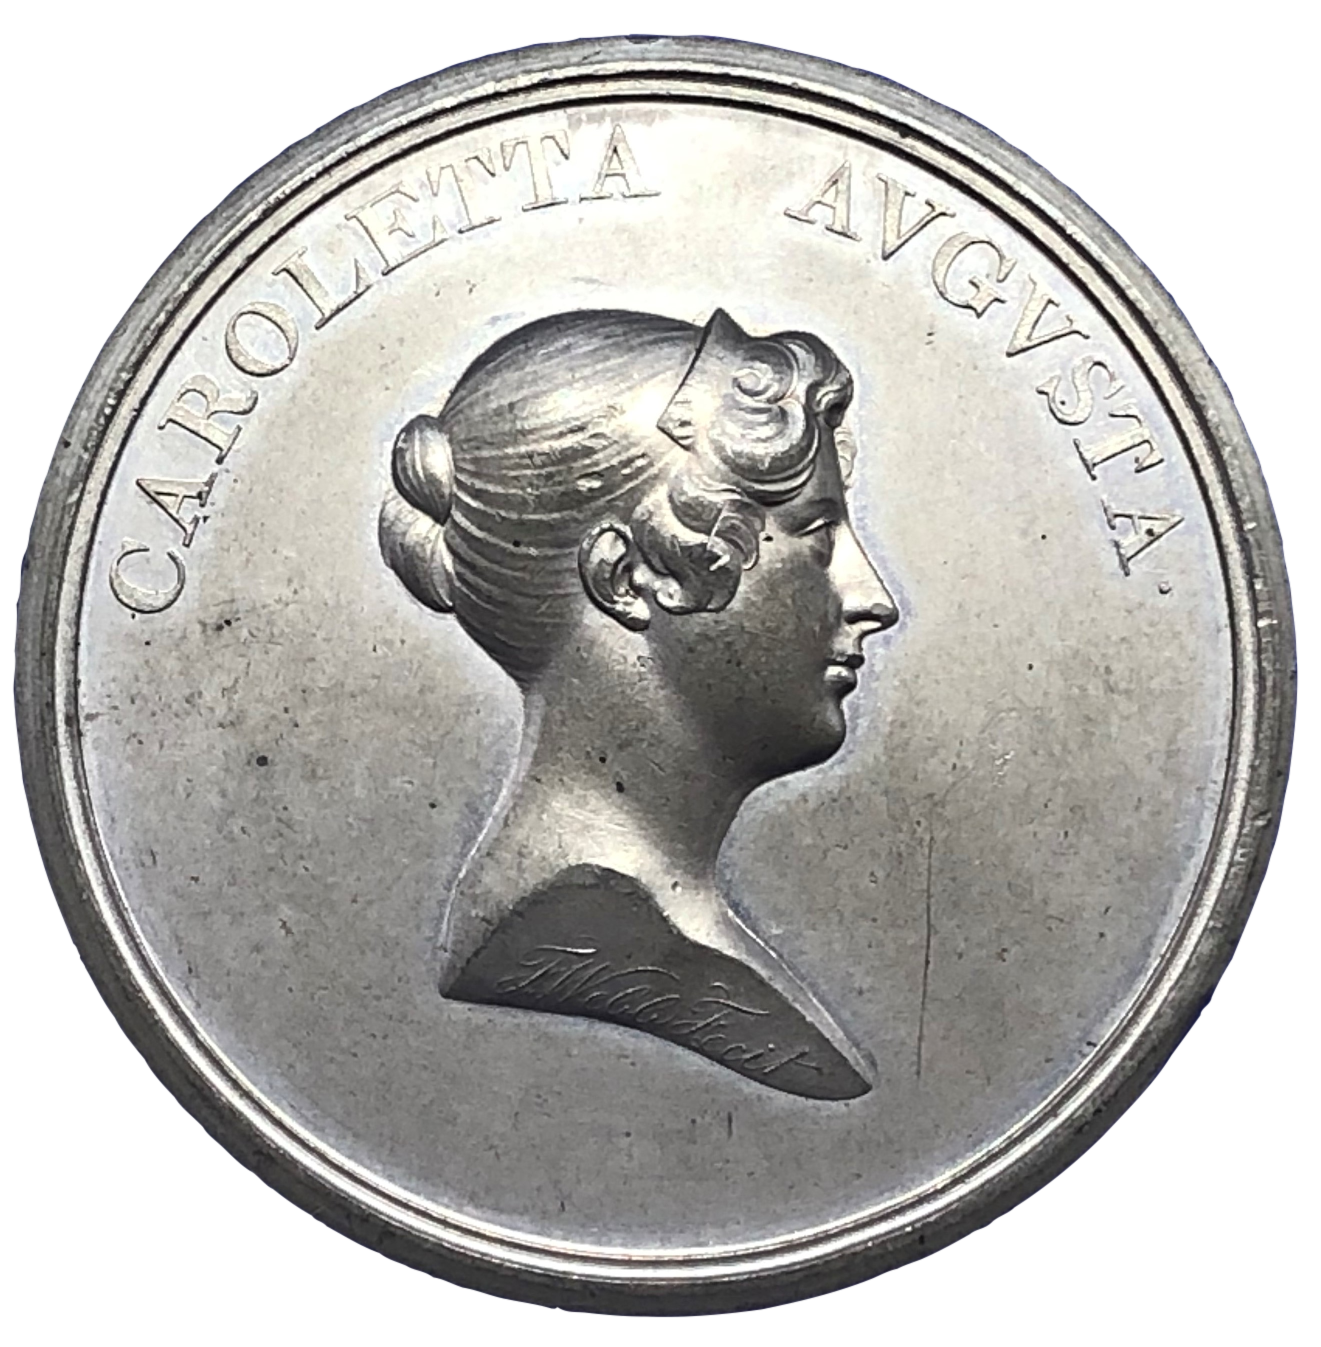 1814 Betrothal of Princess Charlotte Historical Medallion by T Webb Obverse